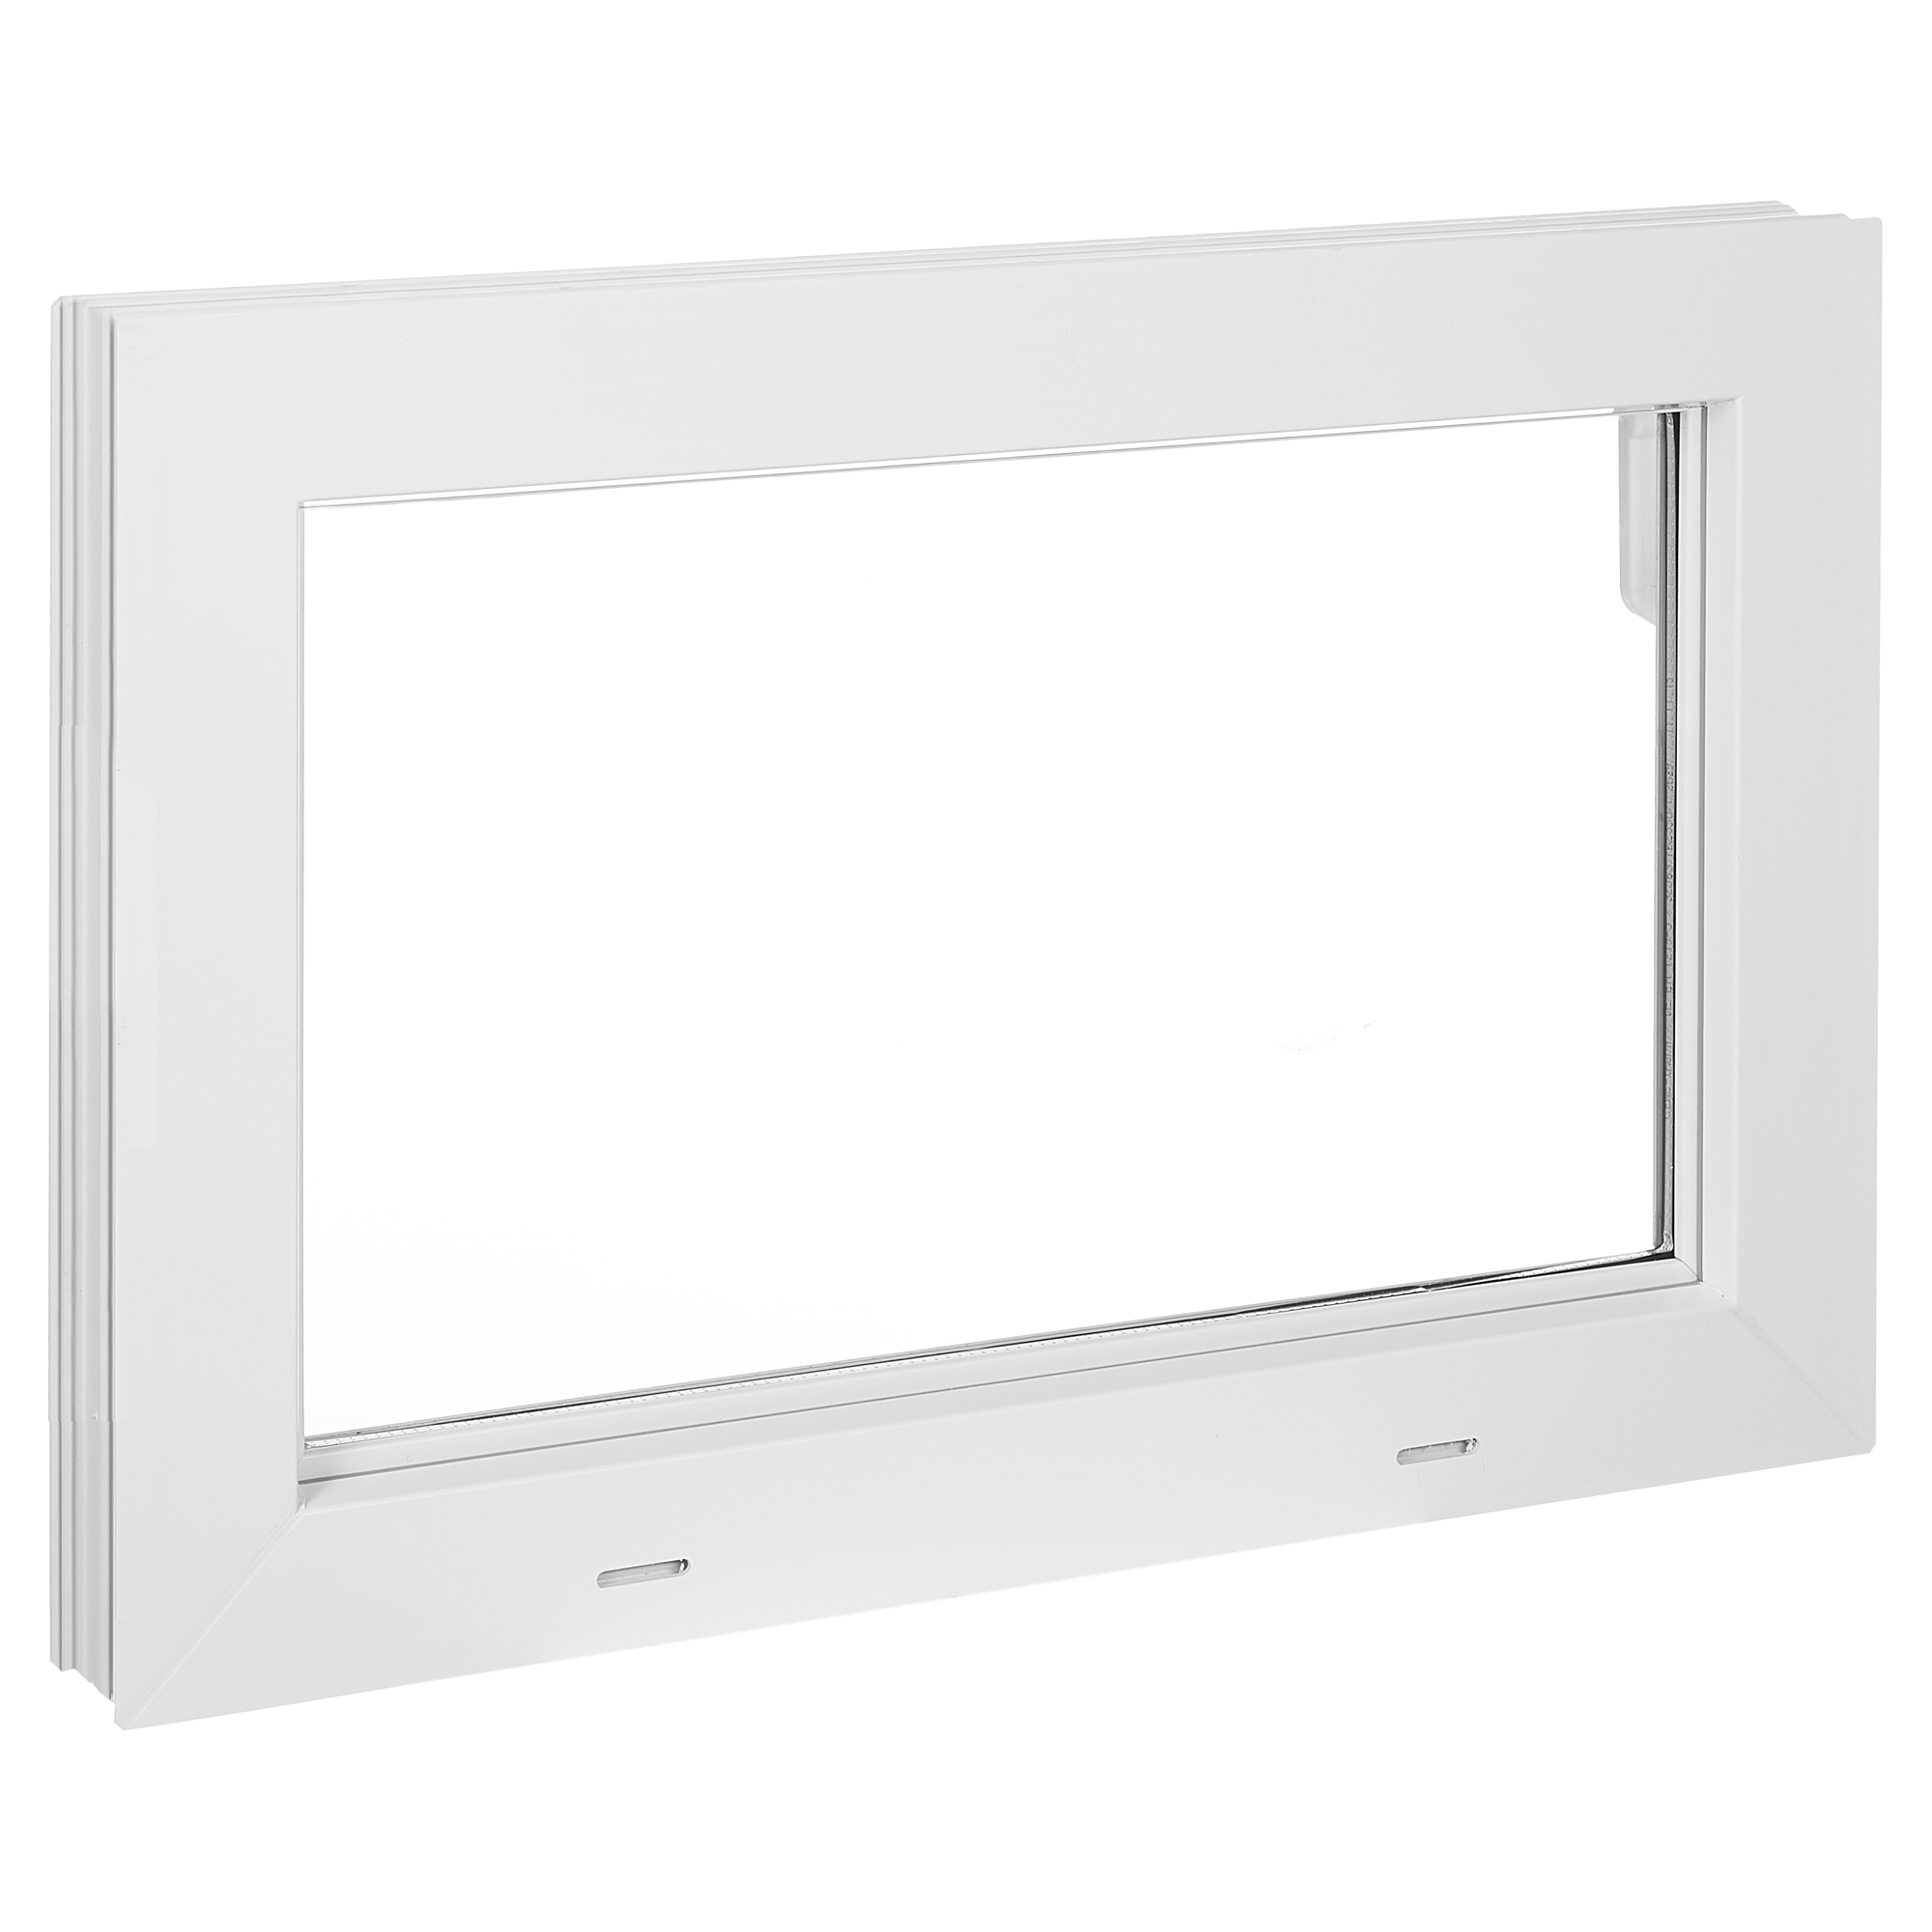 Kippfenster weiß 1-flügelig 60 x 40 cm + product picture